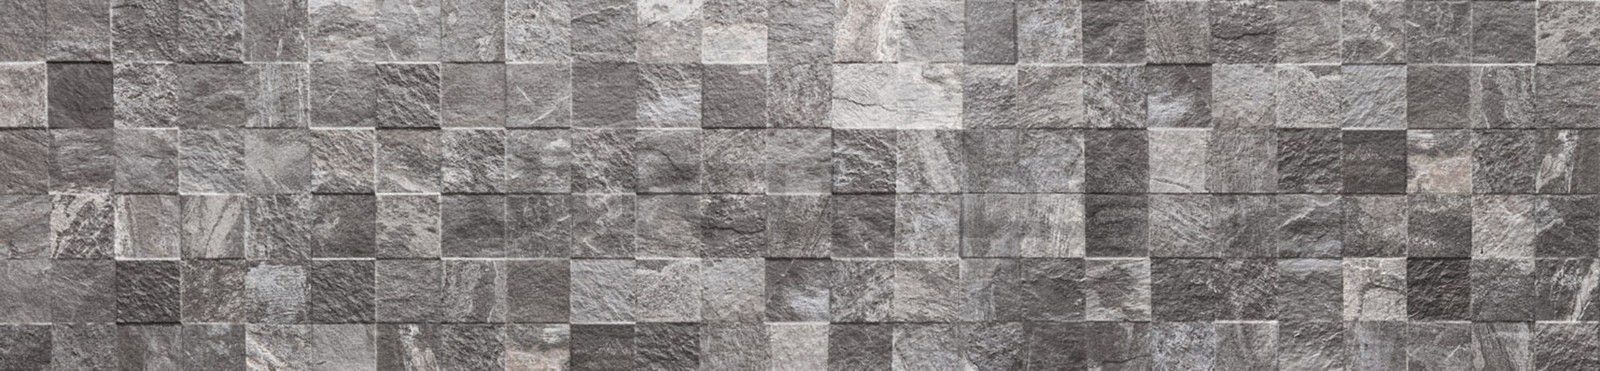 Samoljepljiva periva tapeta za kuhinju - Kamena obloga, 260x60 cm